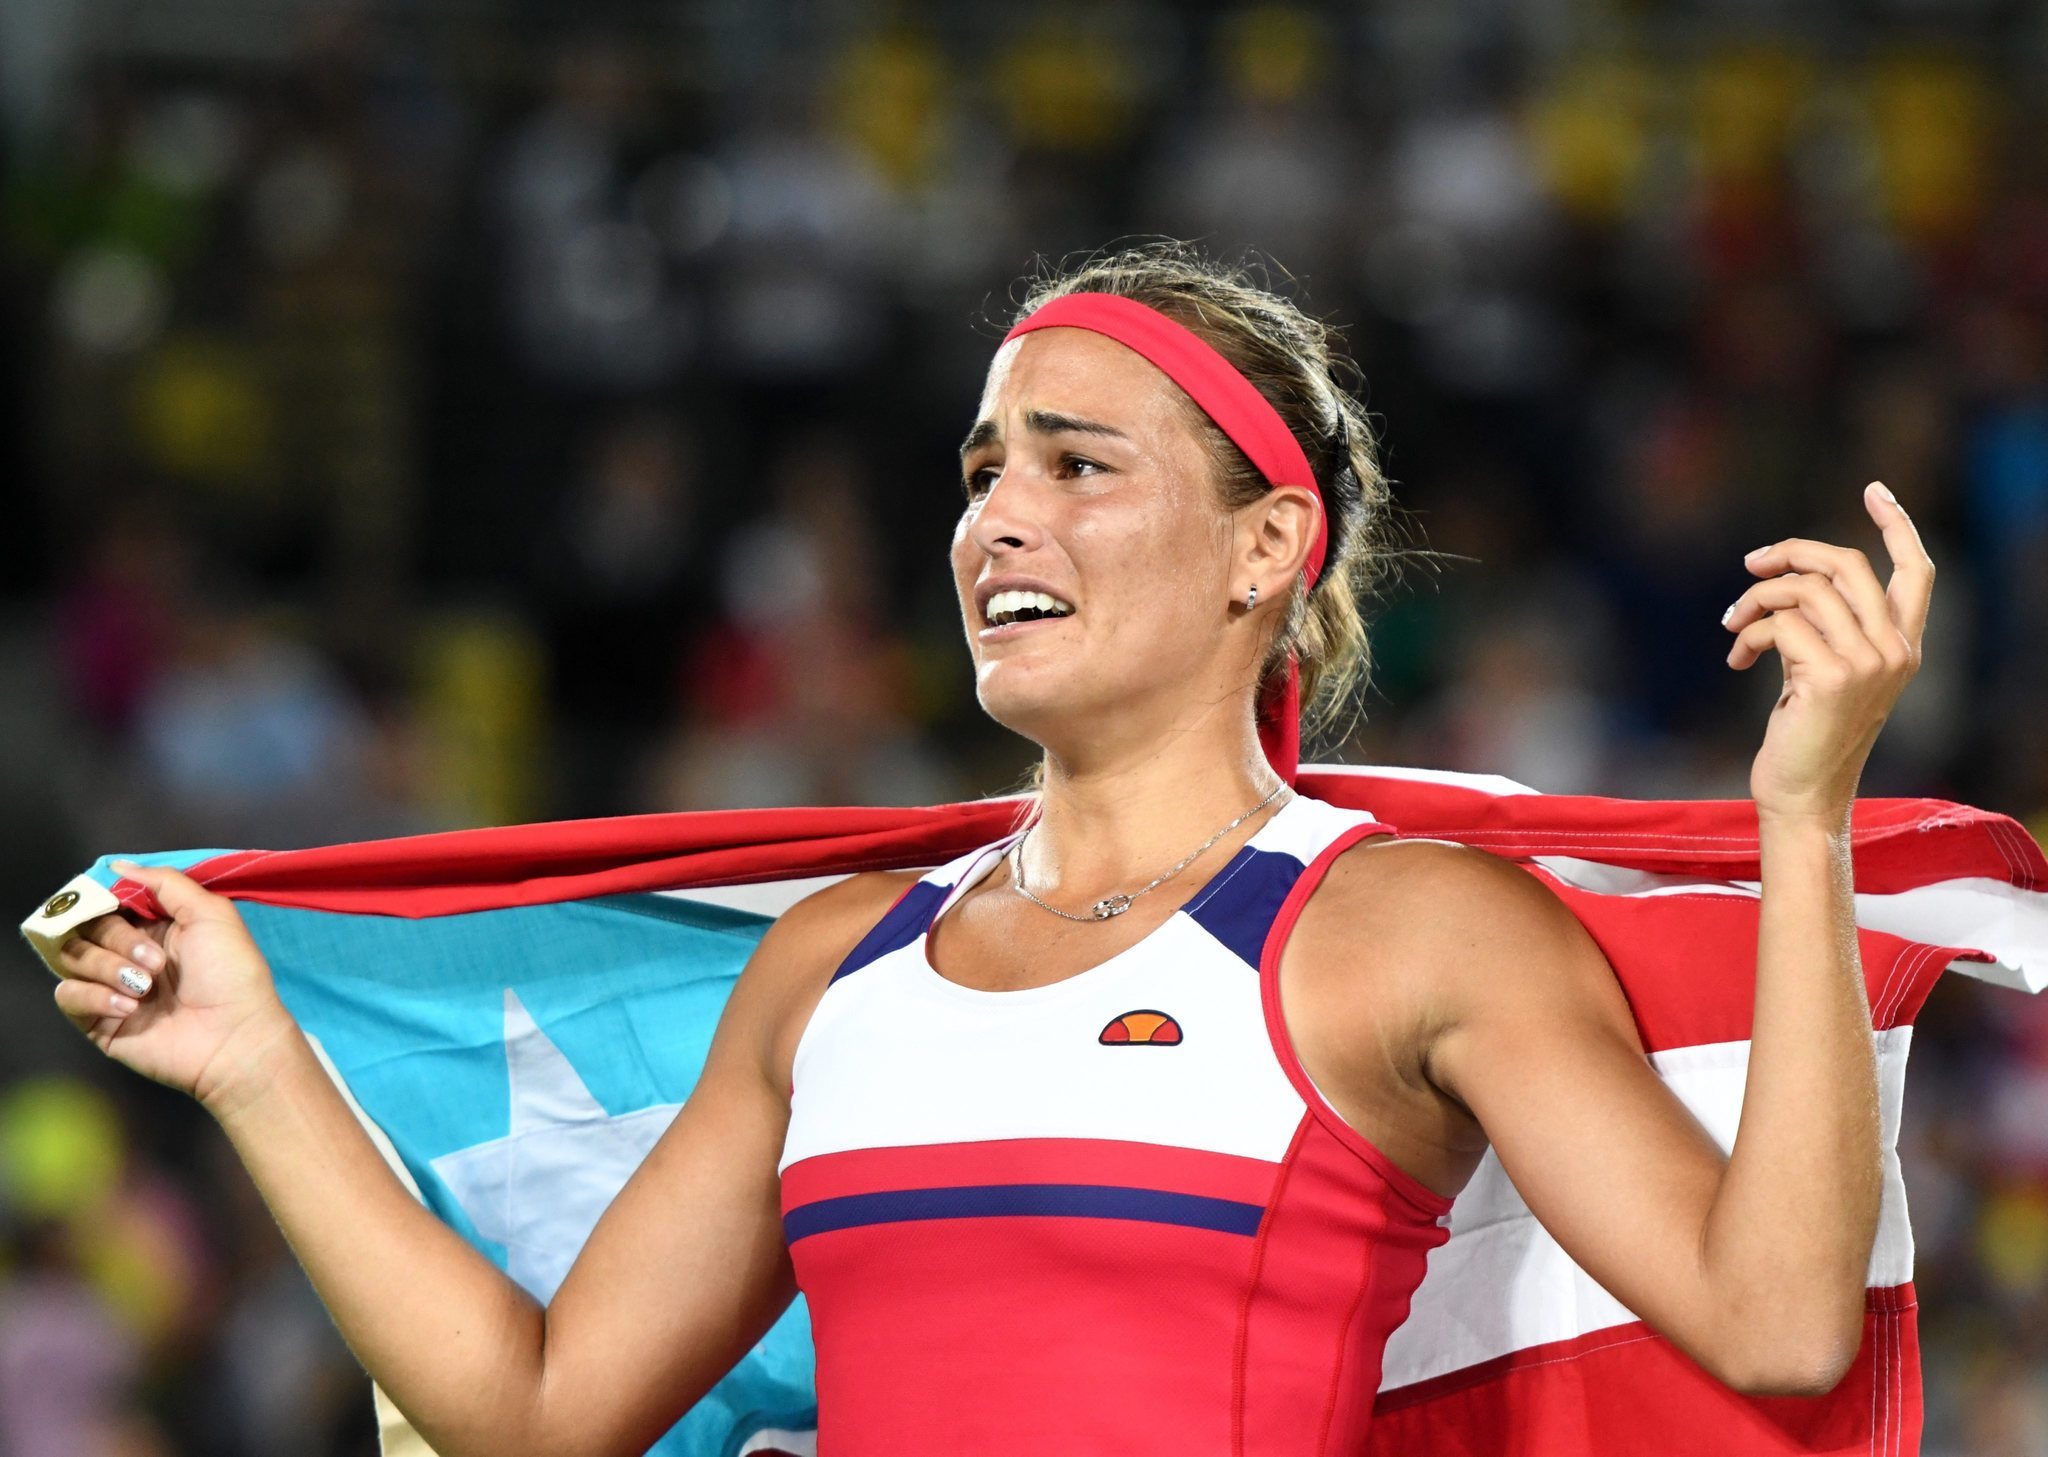 ct-monica-puig-puerto-rico-olympics-gold-medal-20160813